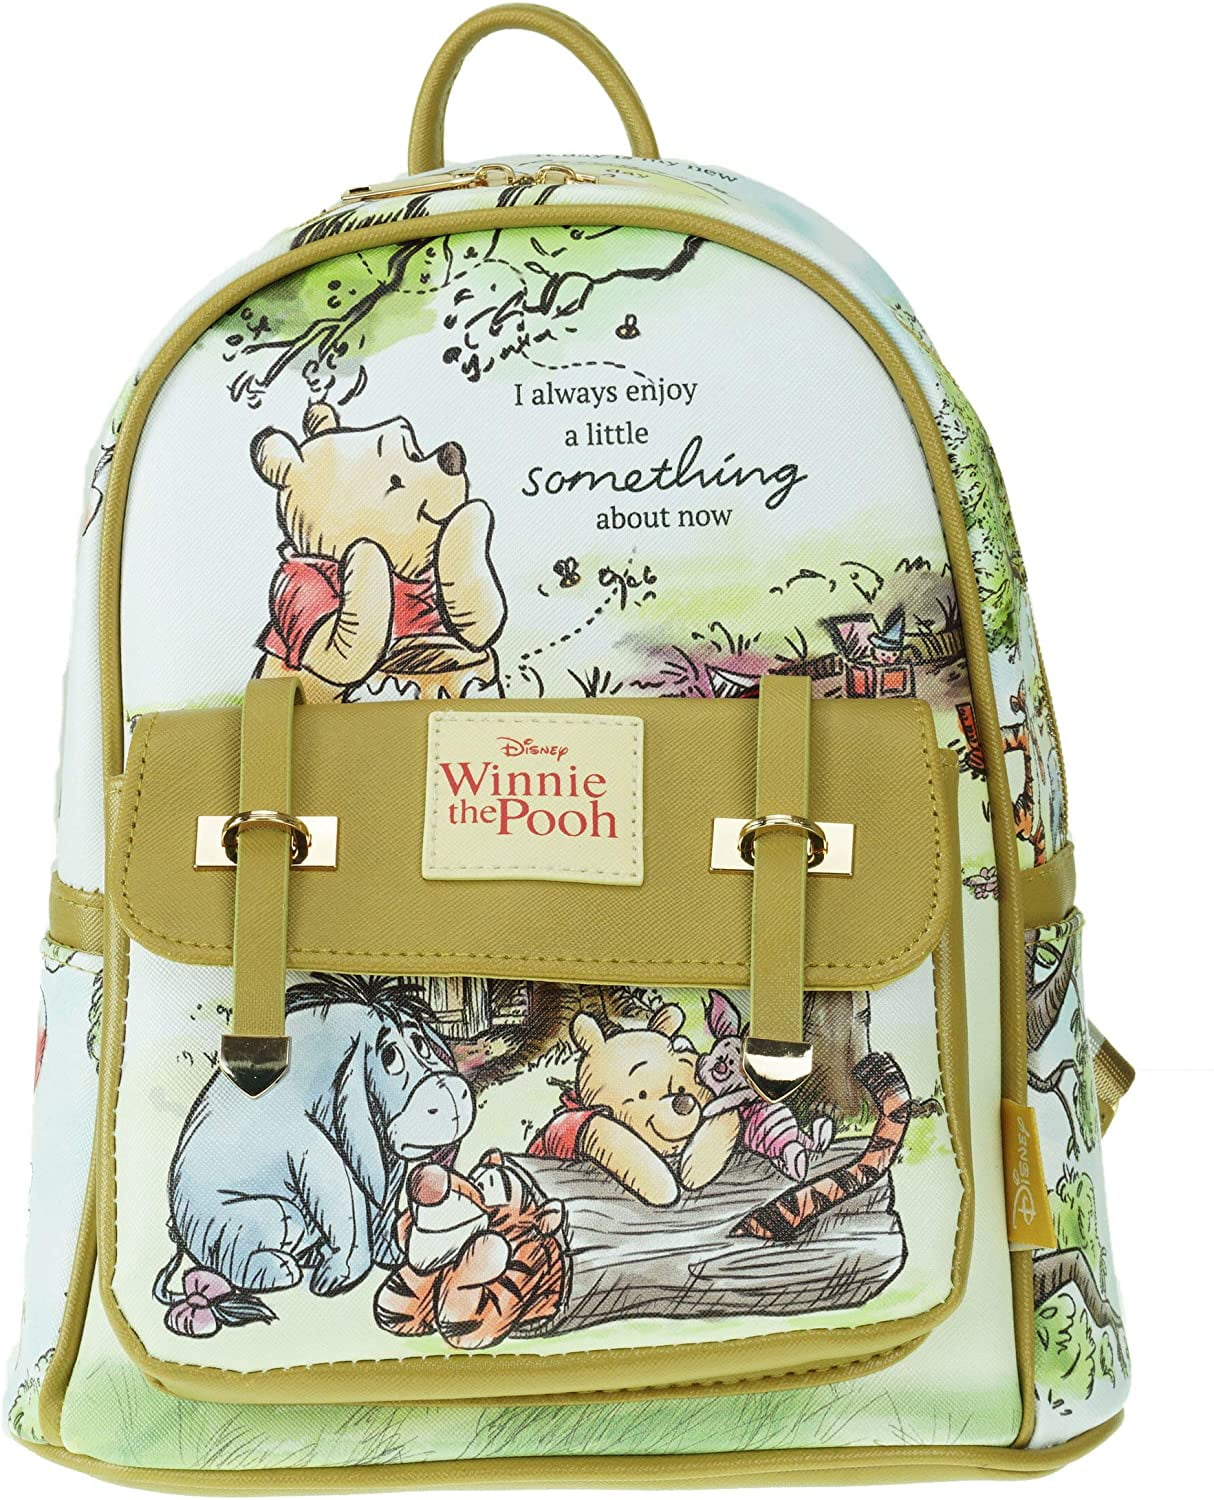 Winnie the Pooh backpack Disney Parks bag hunny backpack backpack Disney Inspired backpack Disney Pooh Bag Disney bag